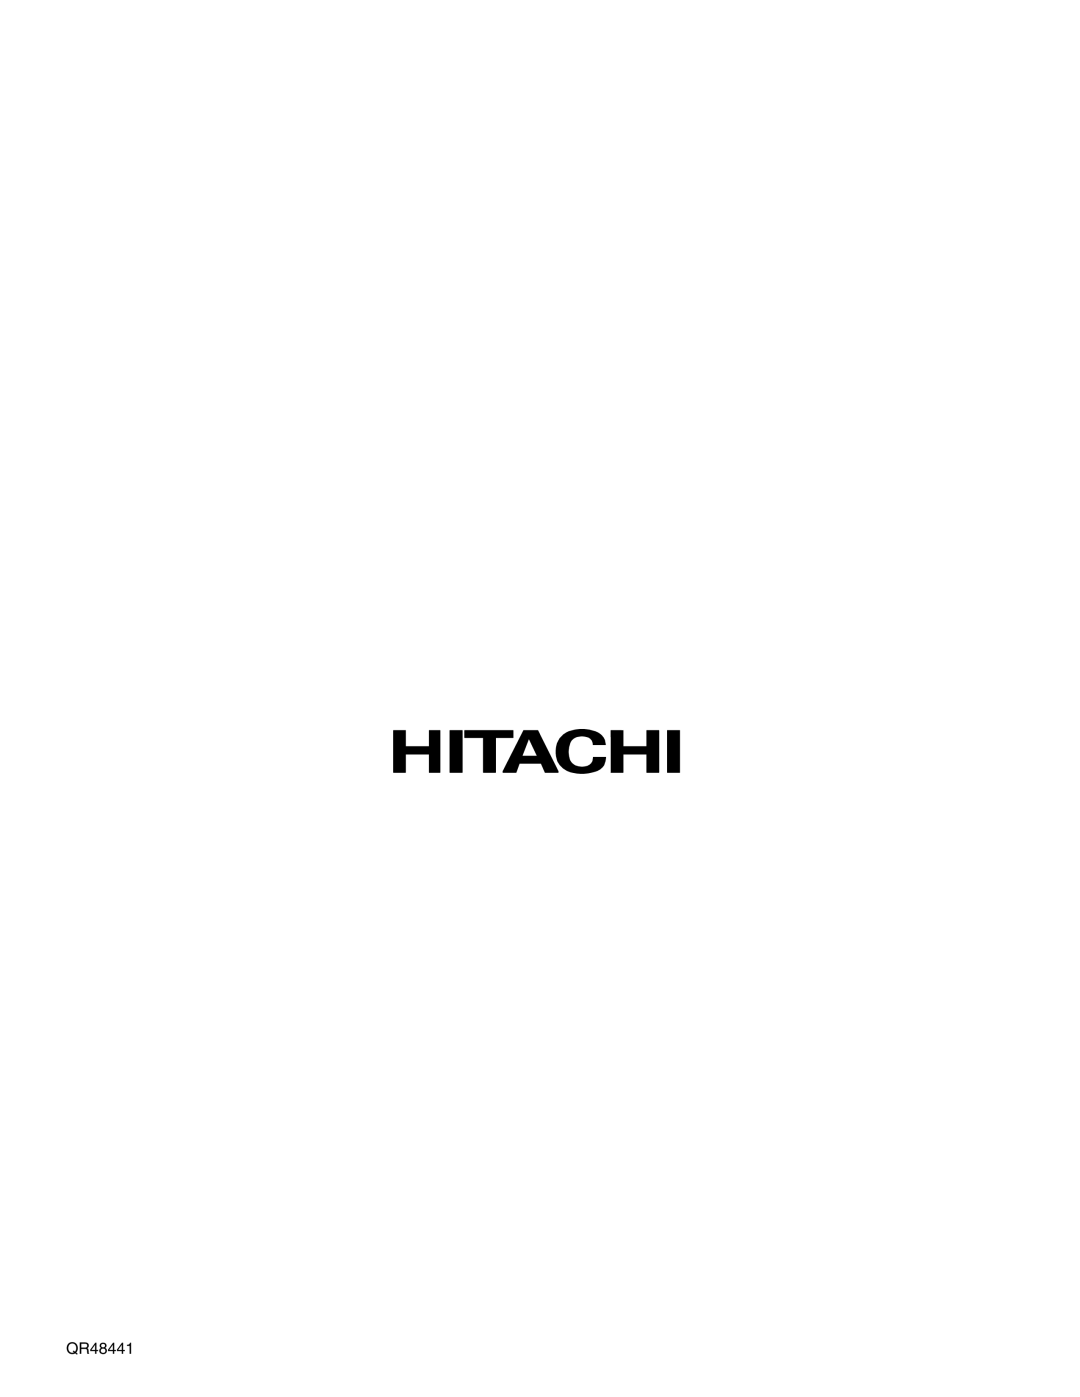 Hitachi 32UDX10S, 36UDX10S manual QR48441 